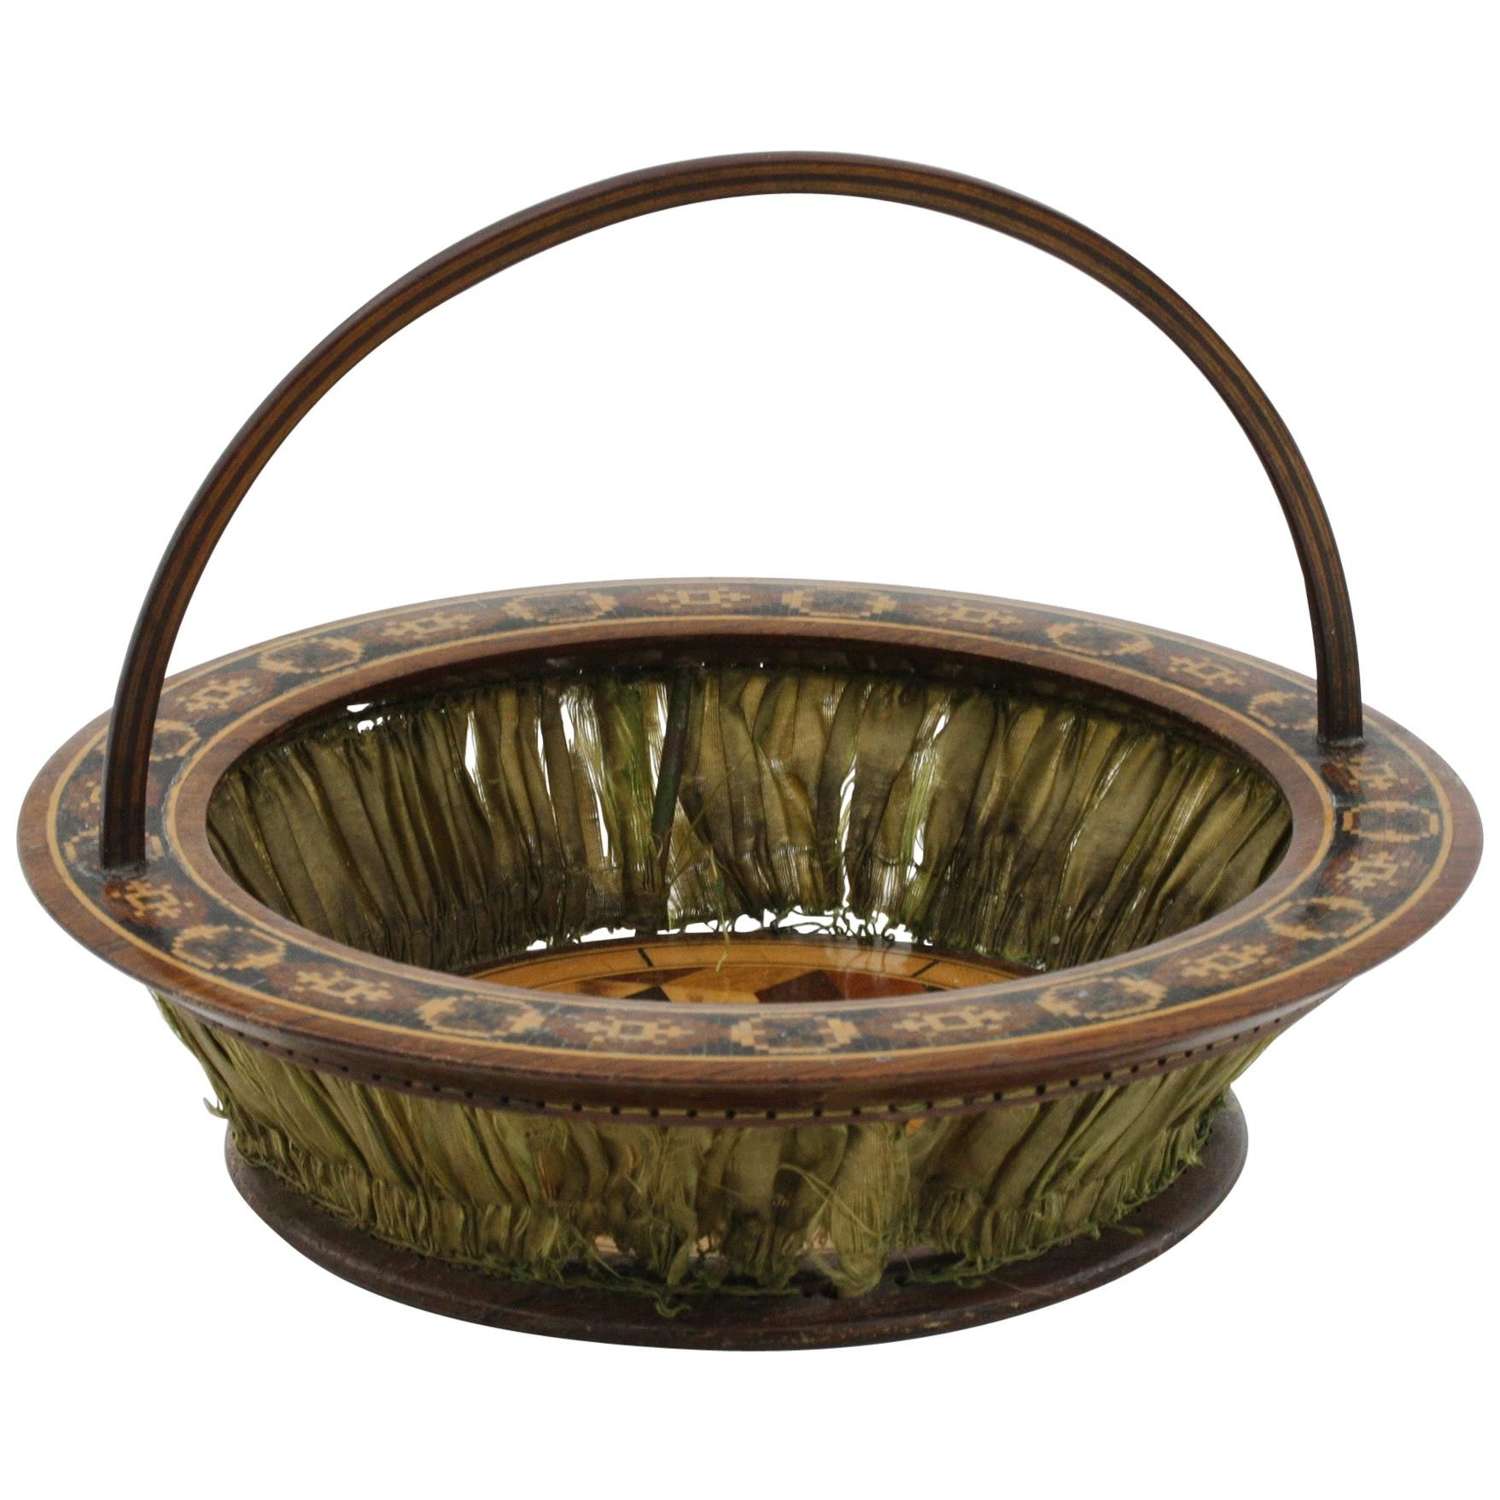 Late Georgian Rare Tunbridgeware Wood and Silk Sewing Basket